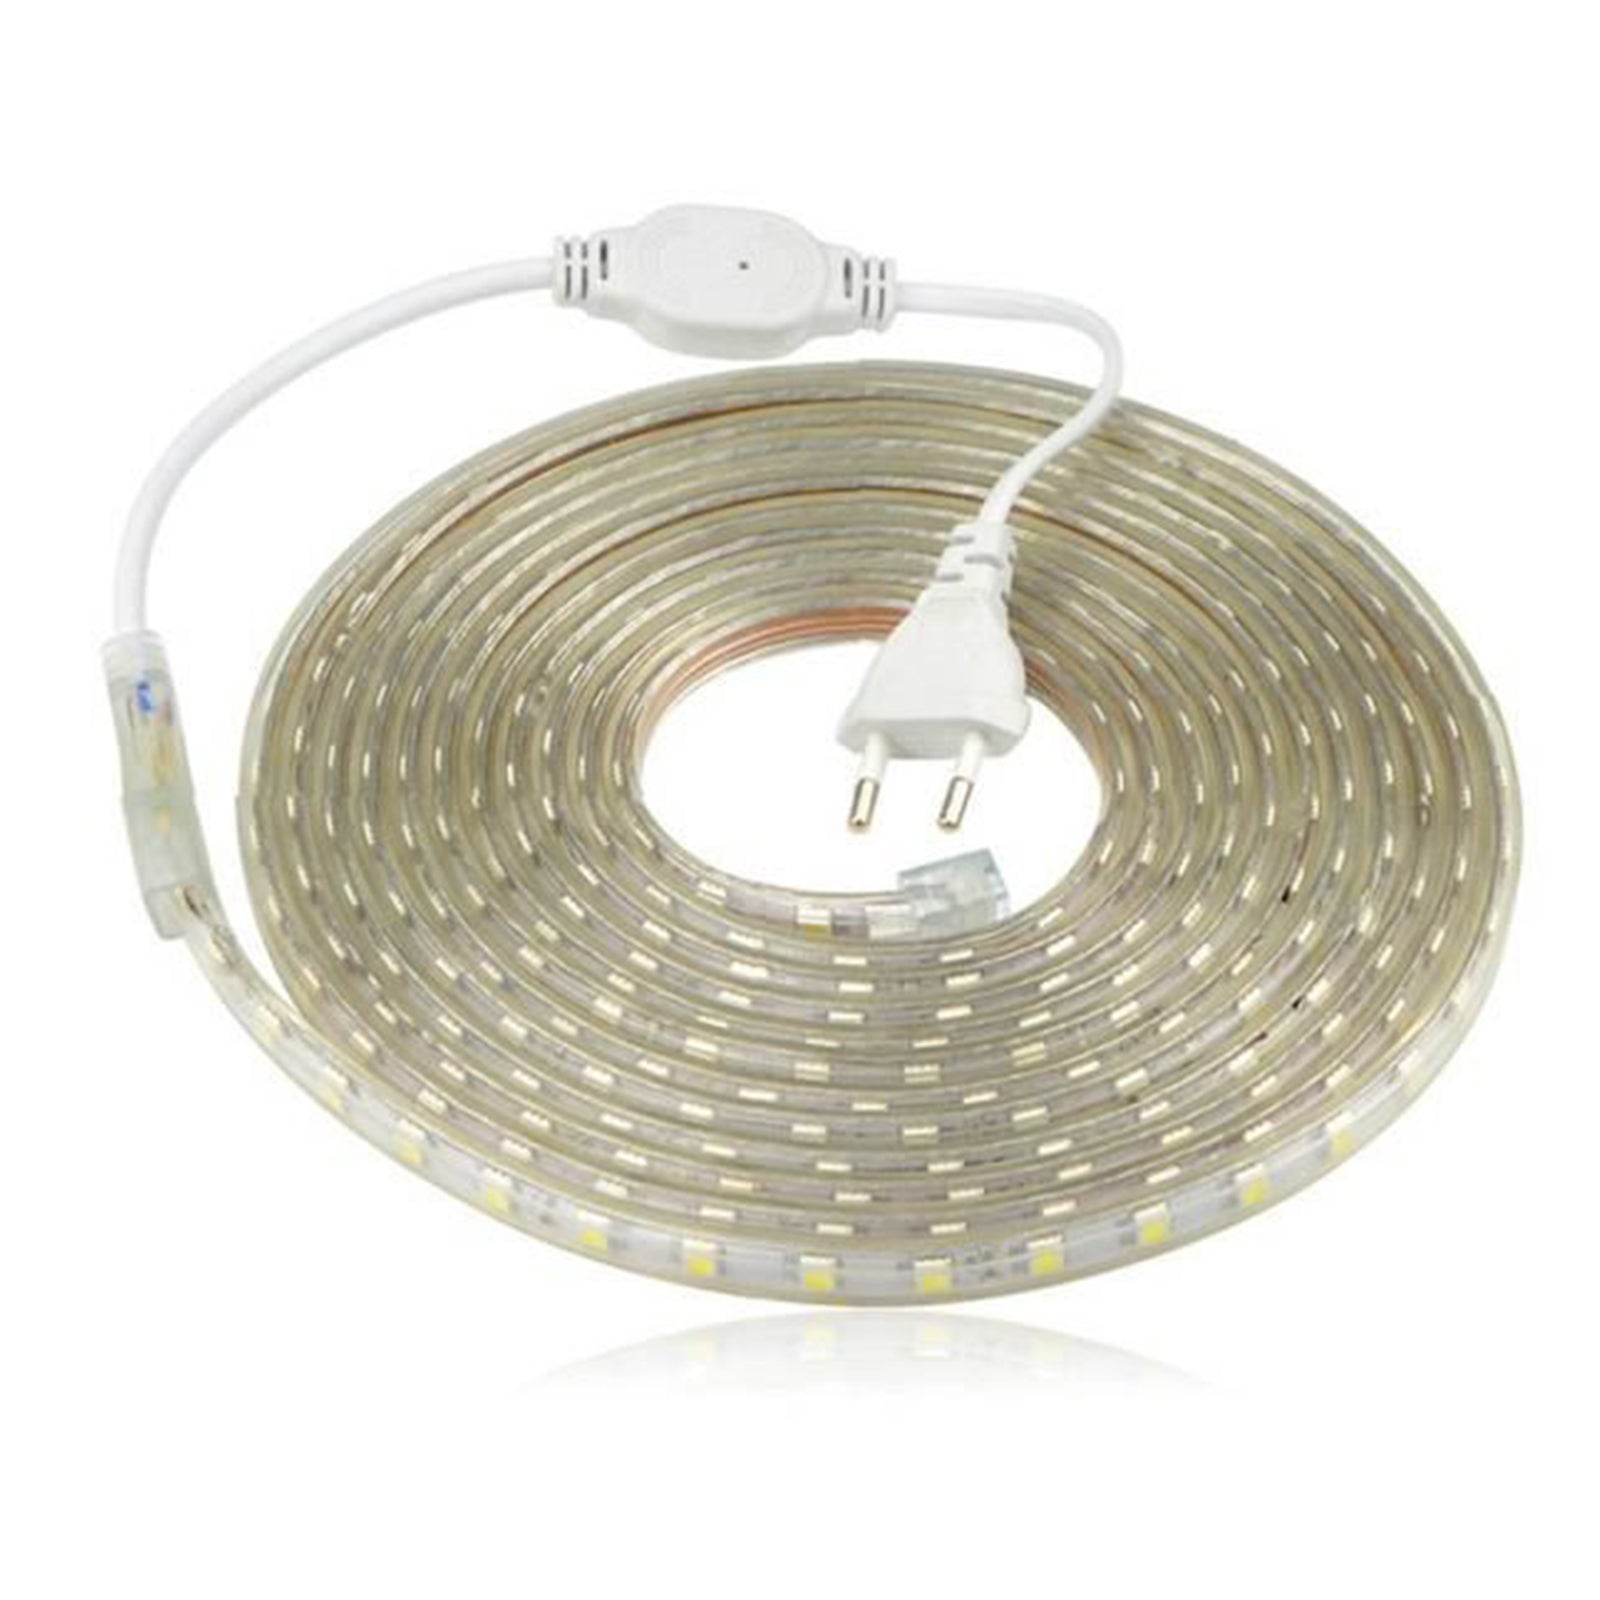 TD® Ruban LED Etanche Bande LED SMD 5050 220V Flexible Lumineuse avec Prise, 3M